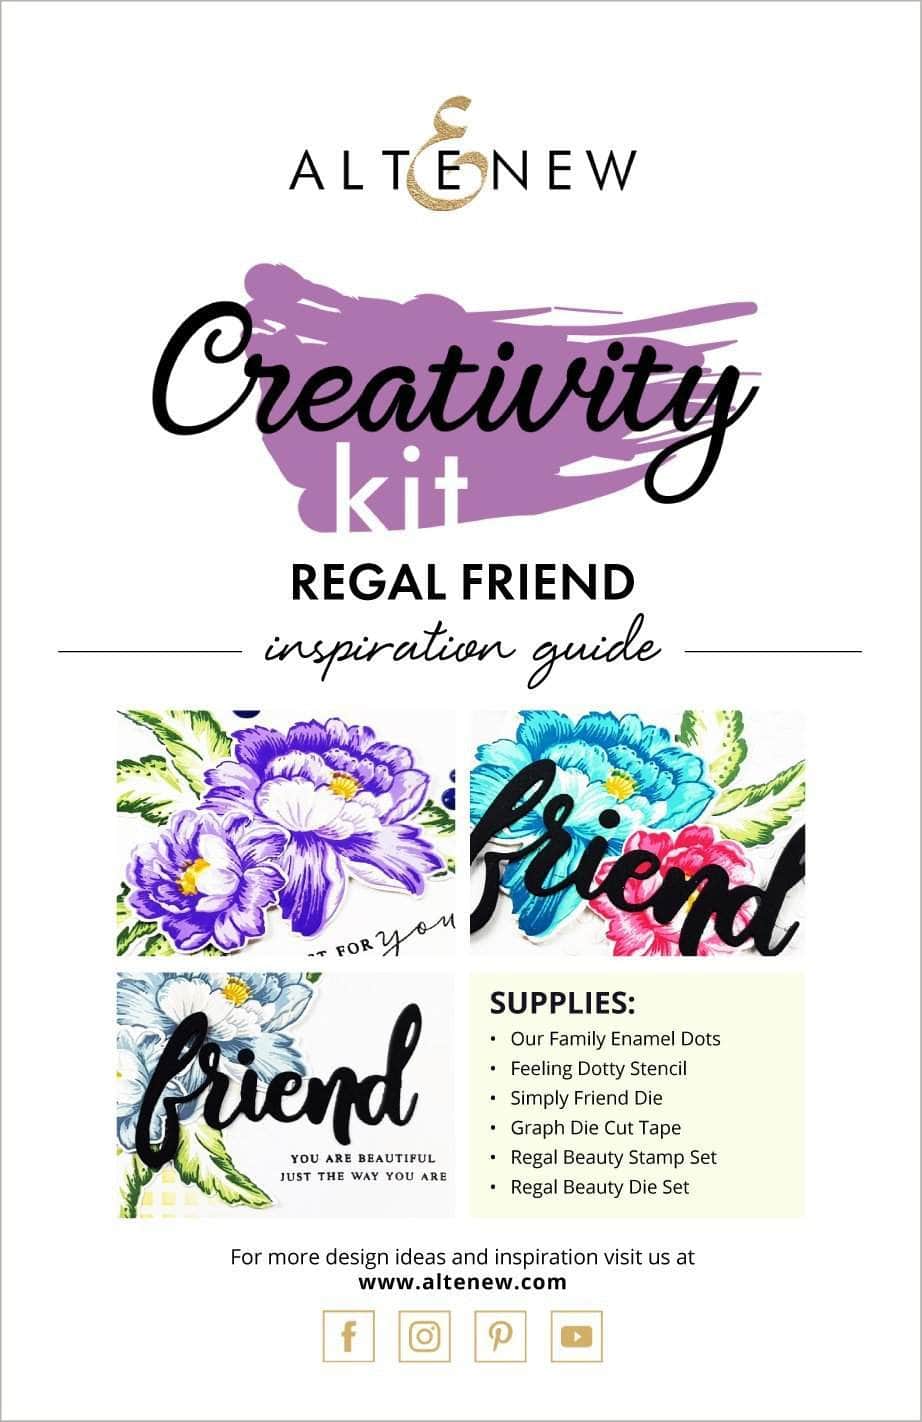 Printed Media Regal Friend Creativity Kit Inspiration Guide